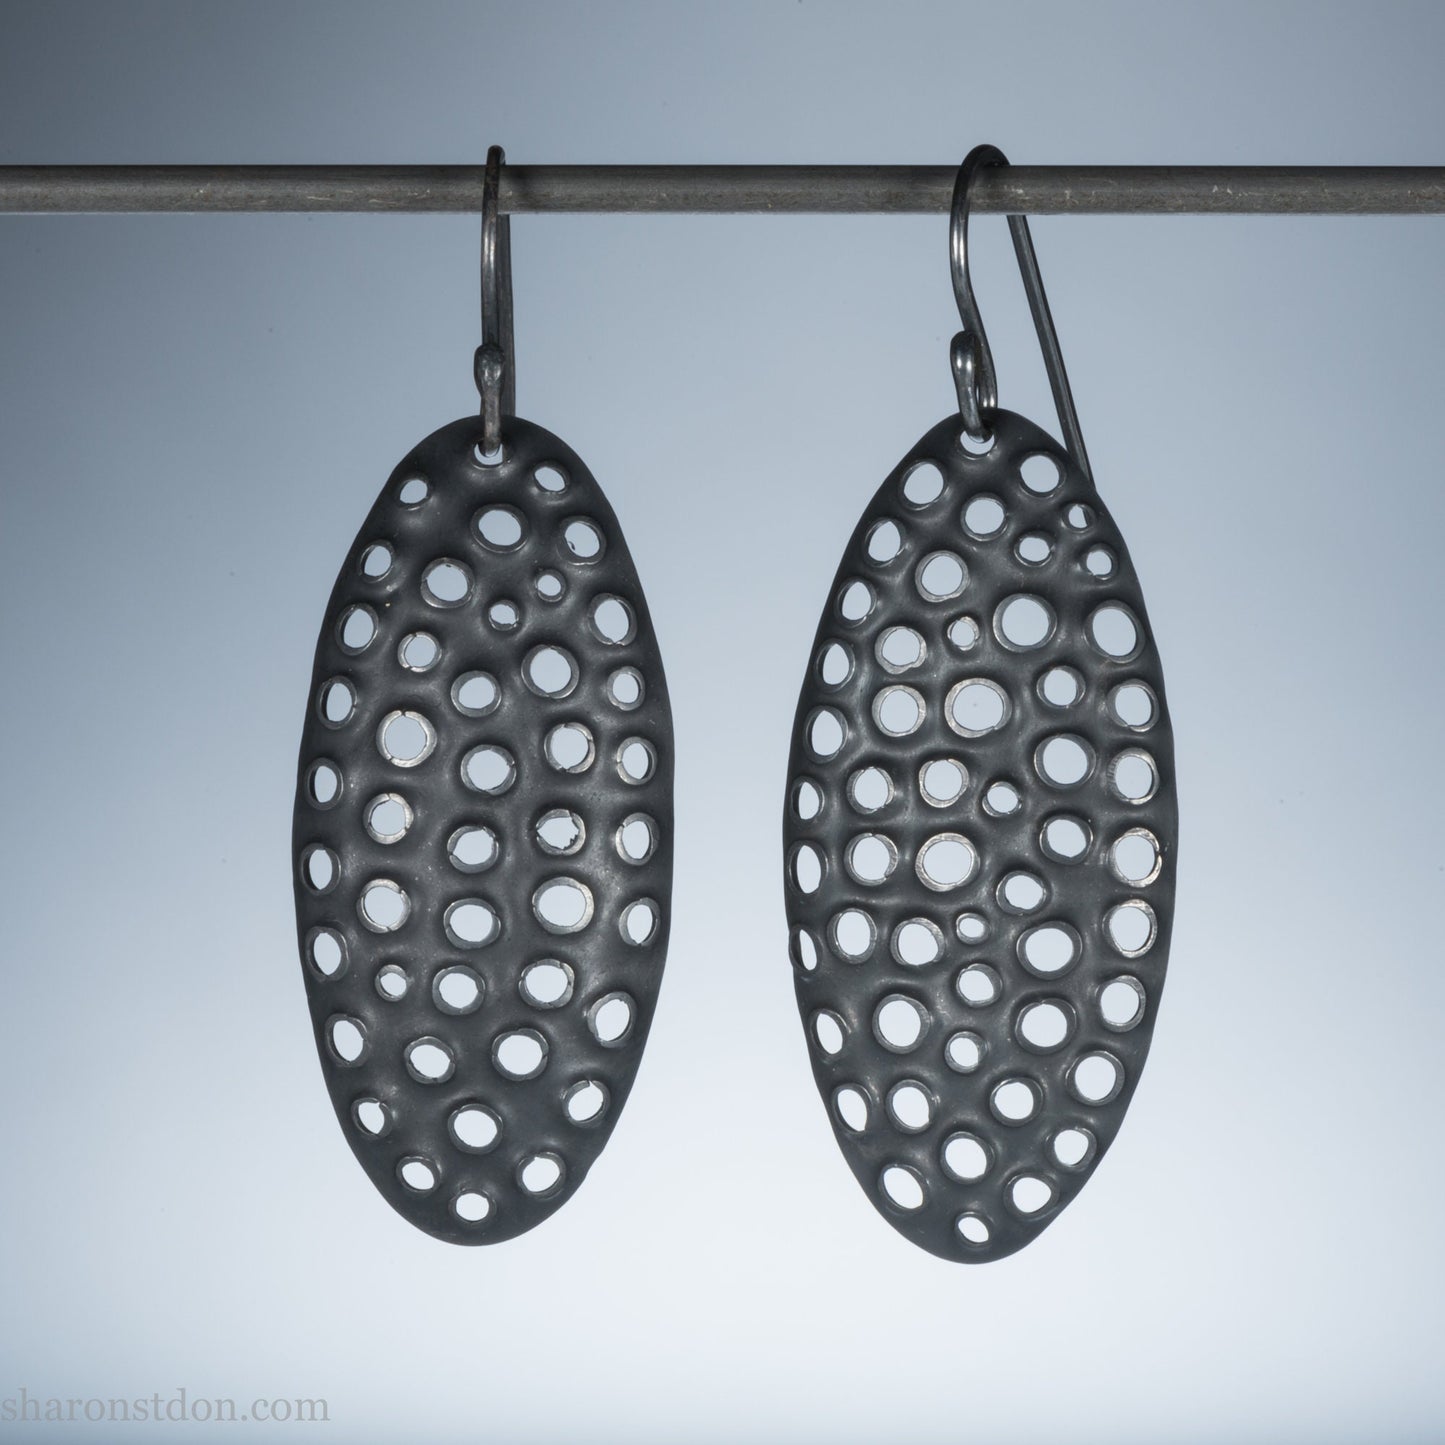 925 sterling silver handmade earrings for women. Comfortable, light, oval dangle earrings w/ mesh dots and ear wire hooks.